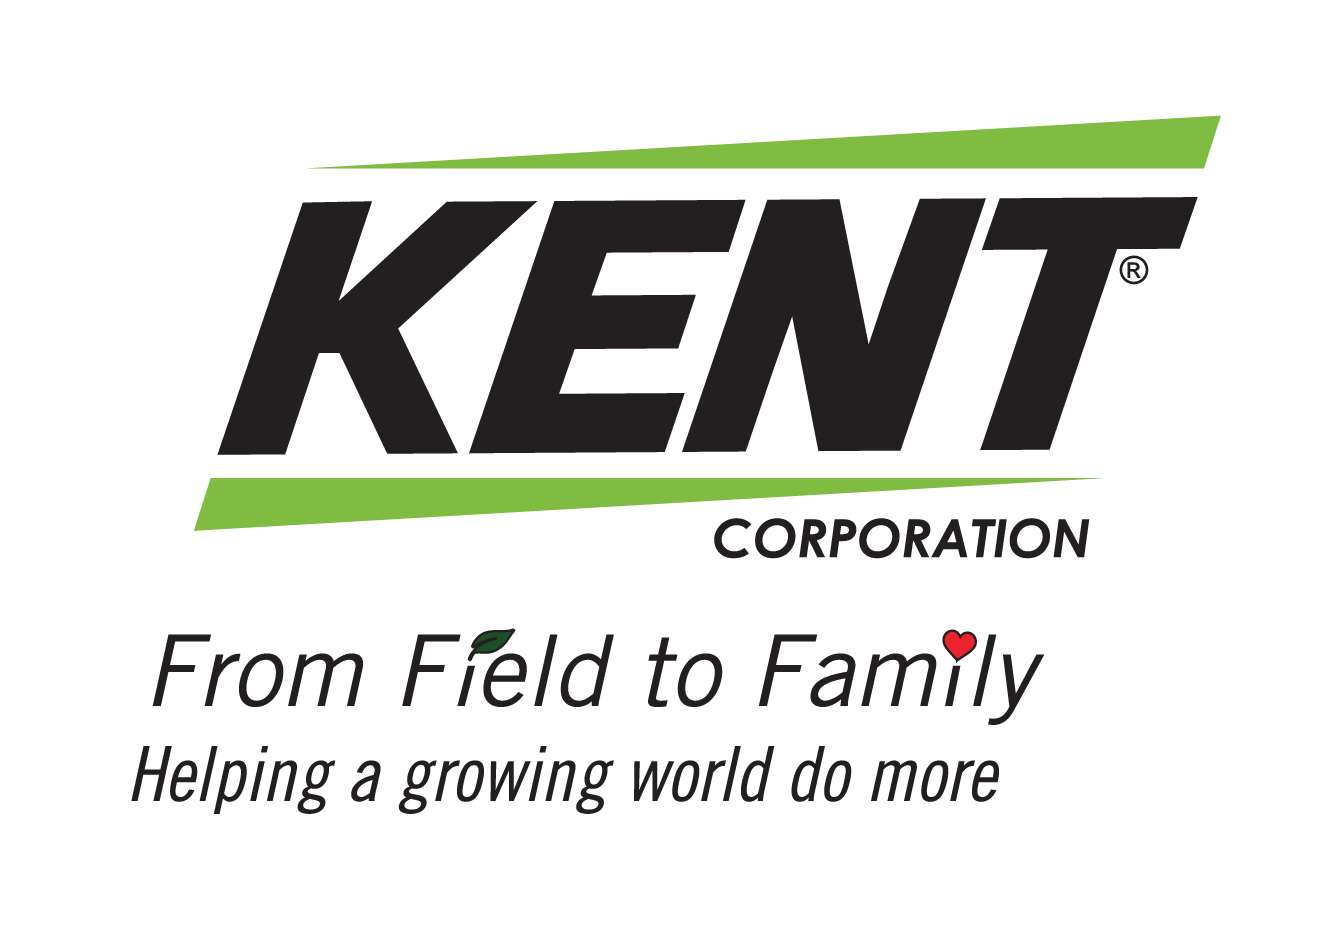 KENT Corporation